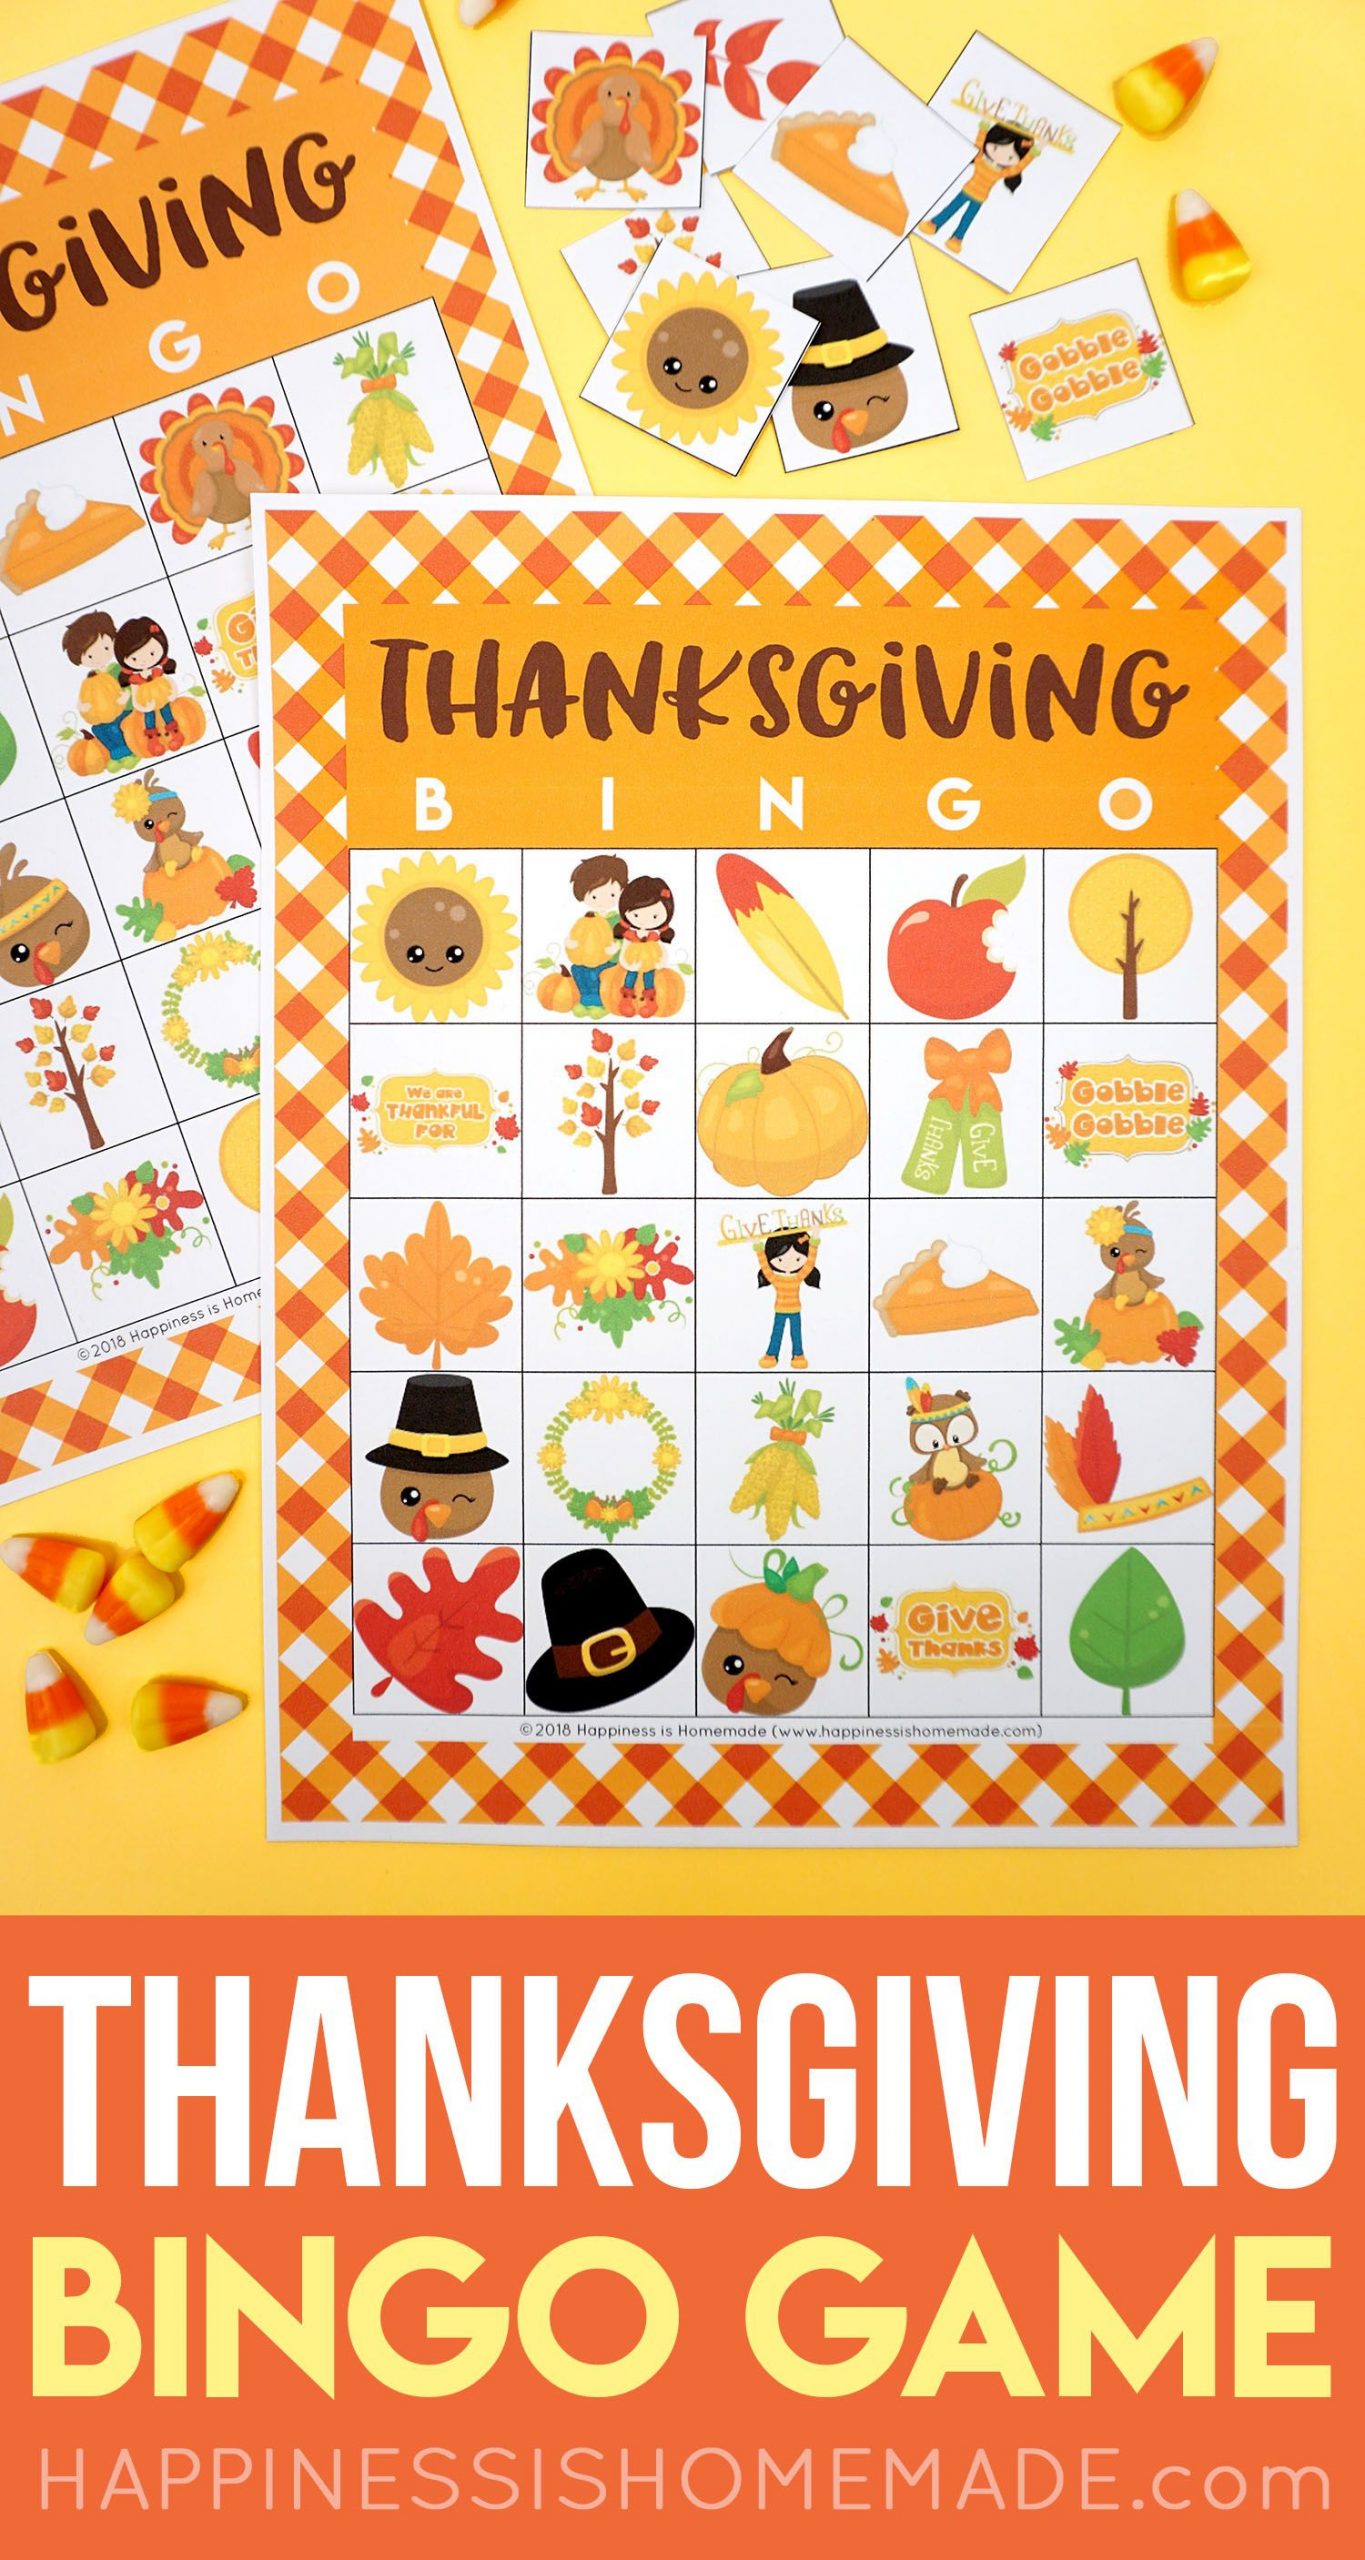 Printable Thanksgiving Bingo Cards - This Thanksgiving Bingo